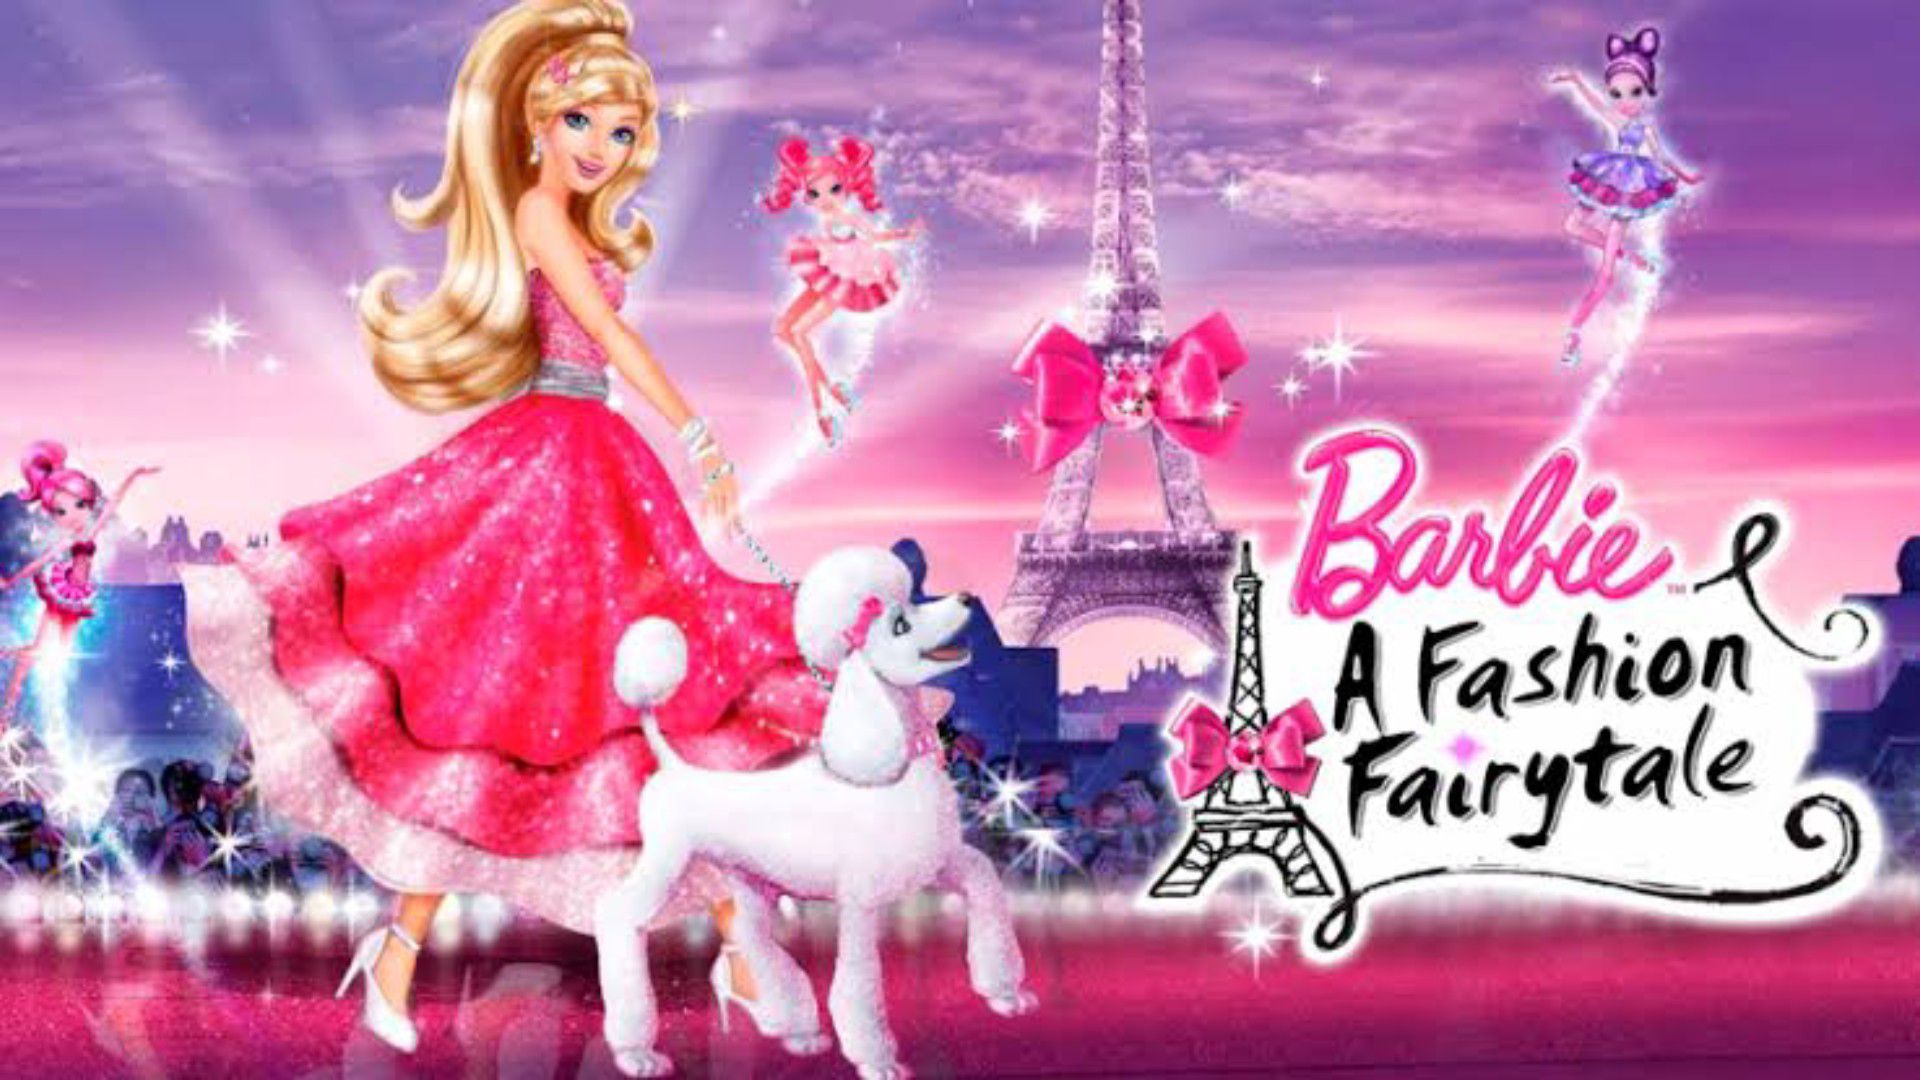 barbie photos of fashion fairytale